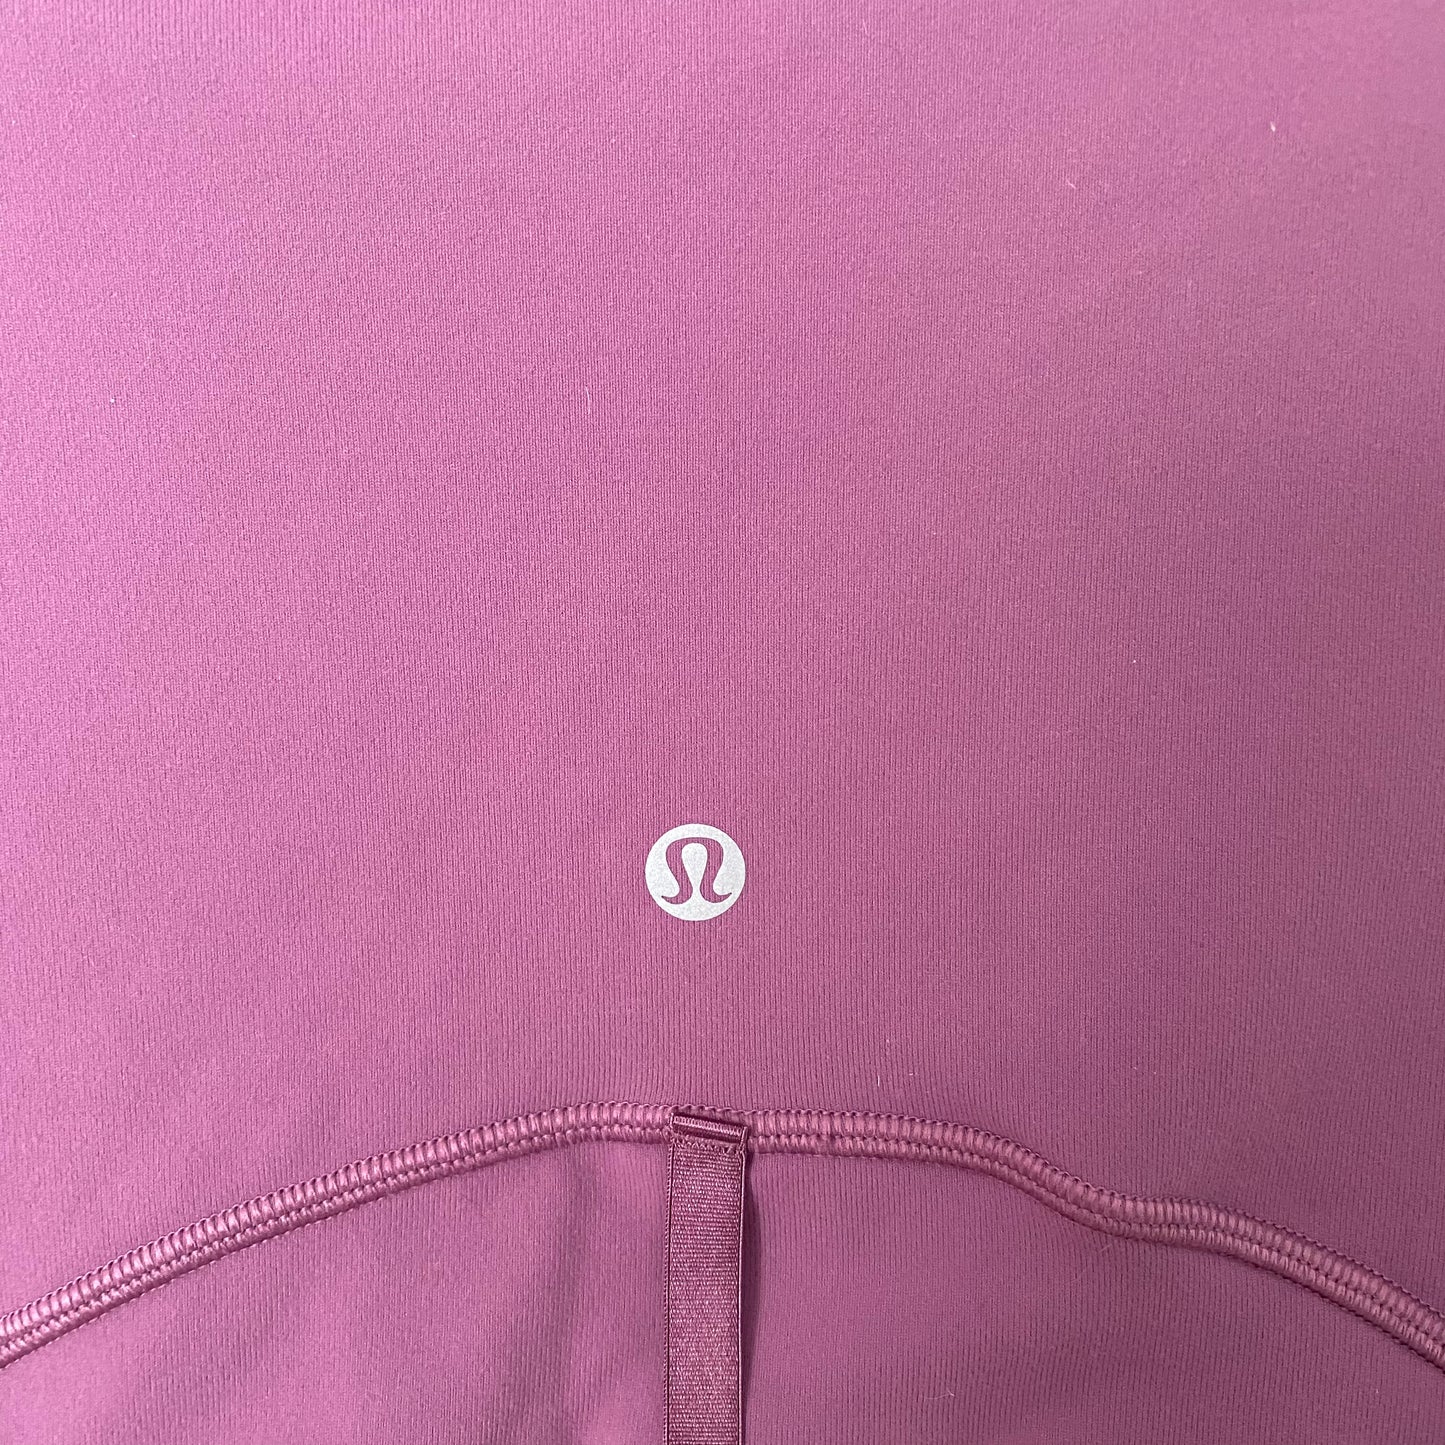 Lululemon Define Jacket Luon Size 12